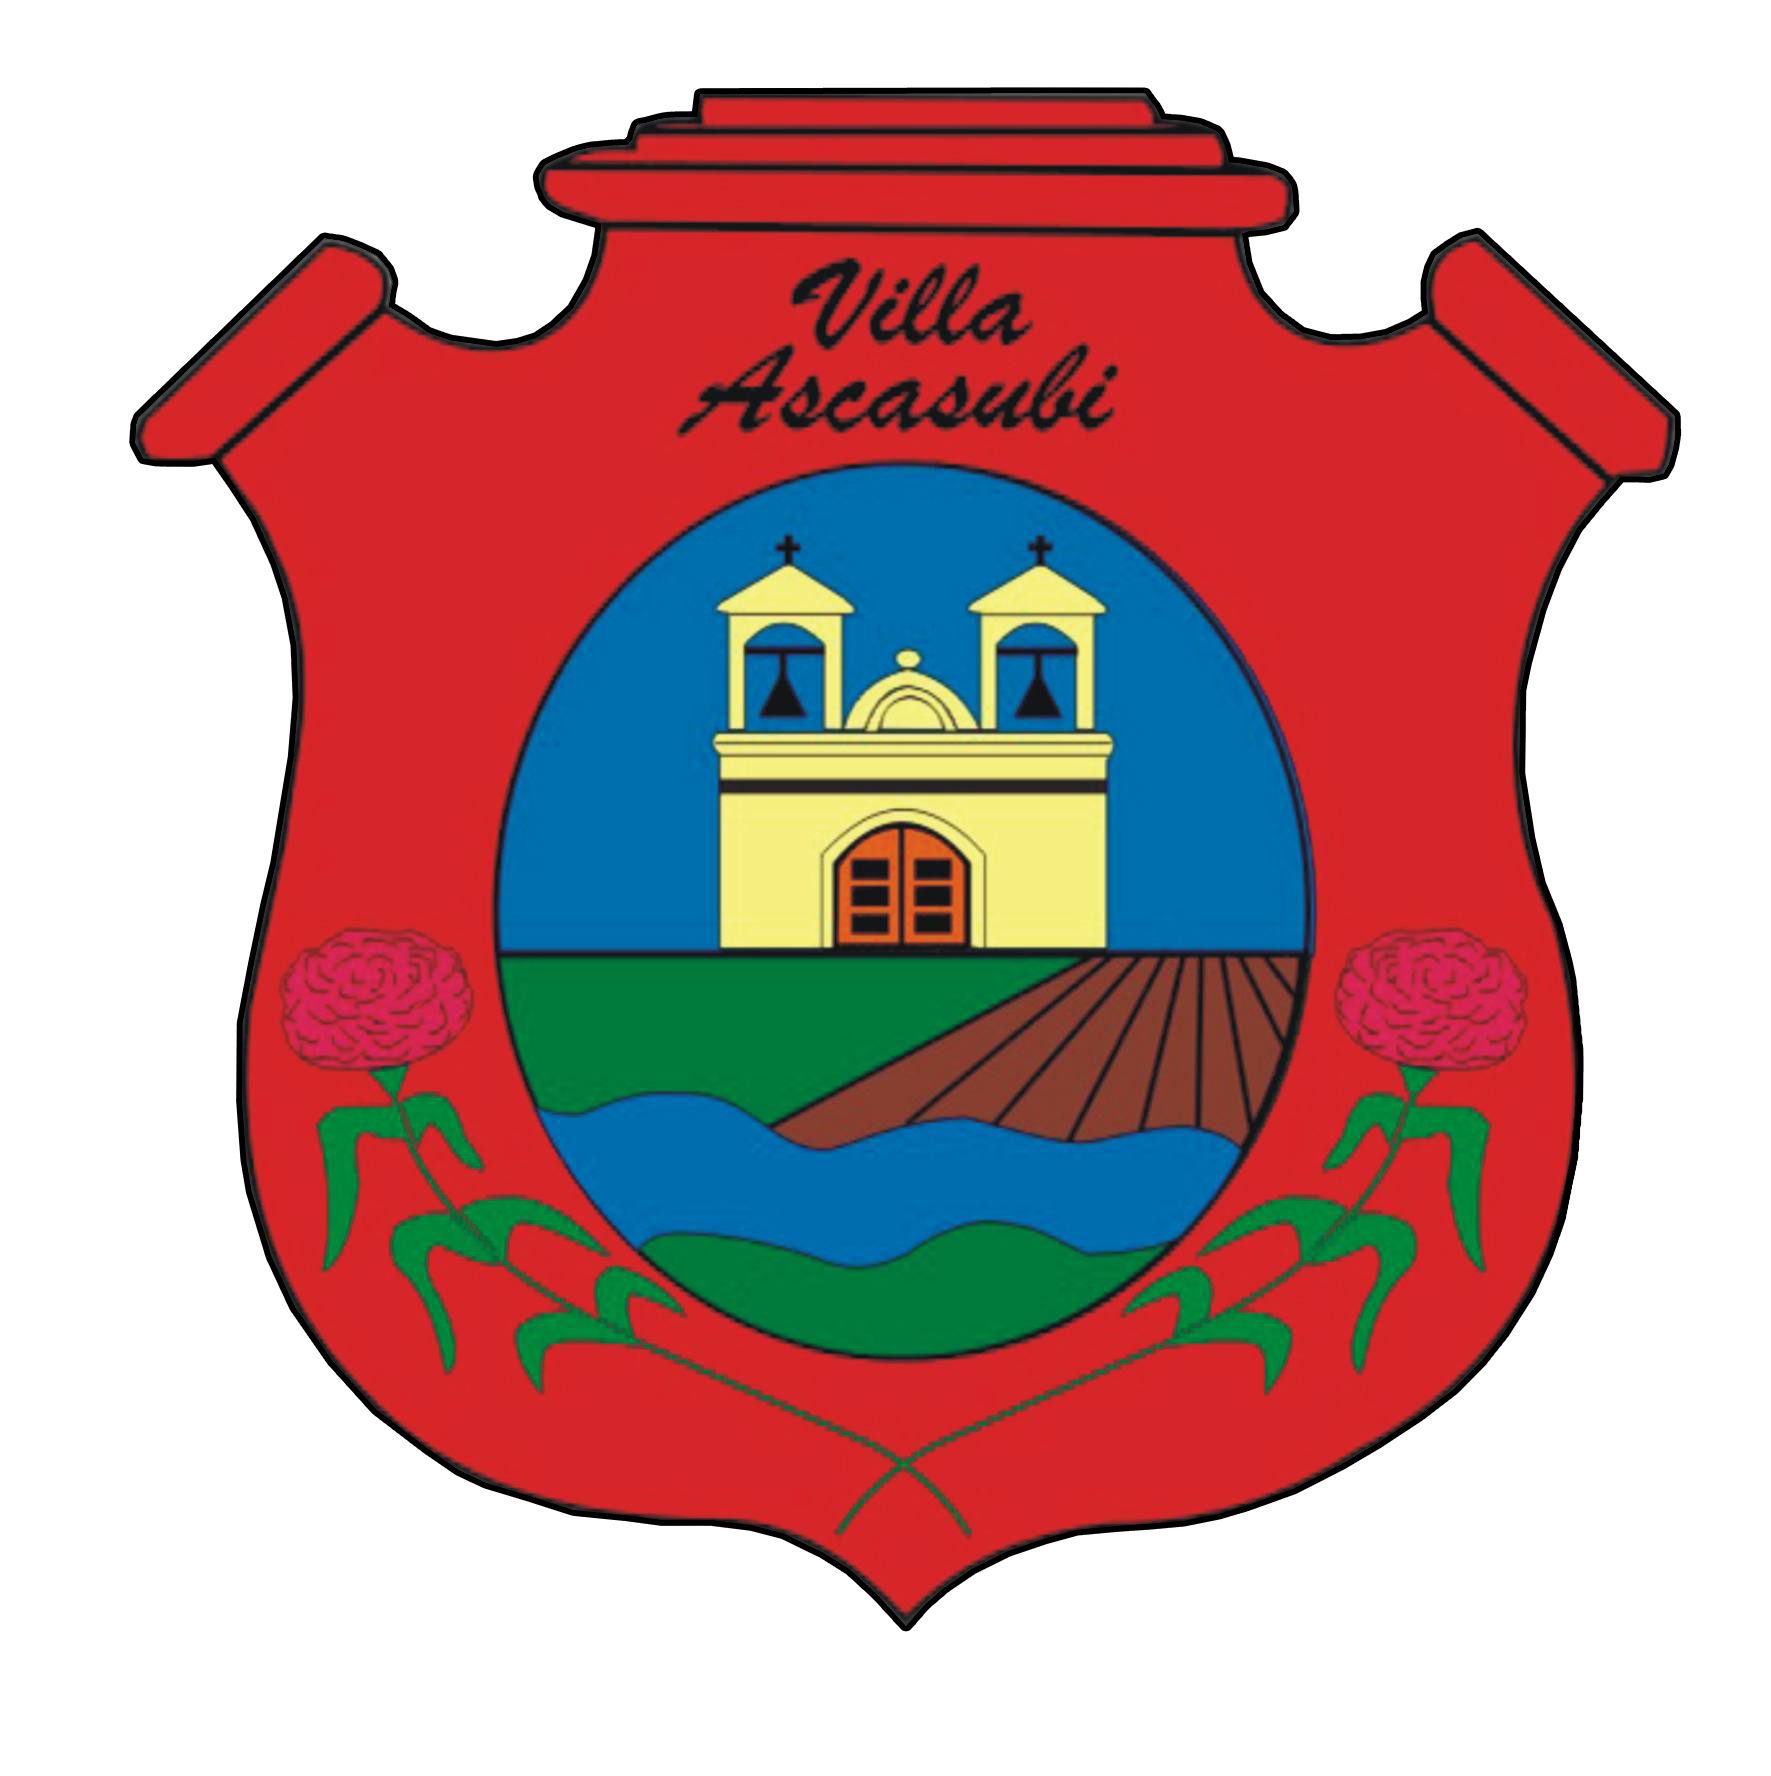 Municipalidad de Villa Ascasubi